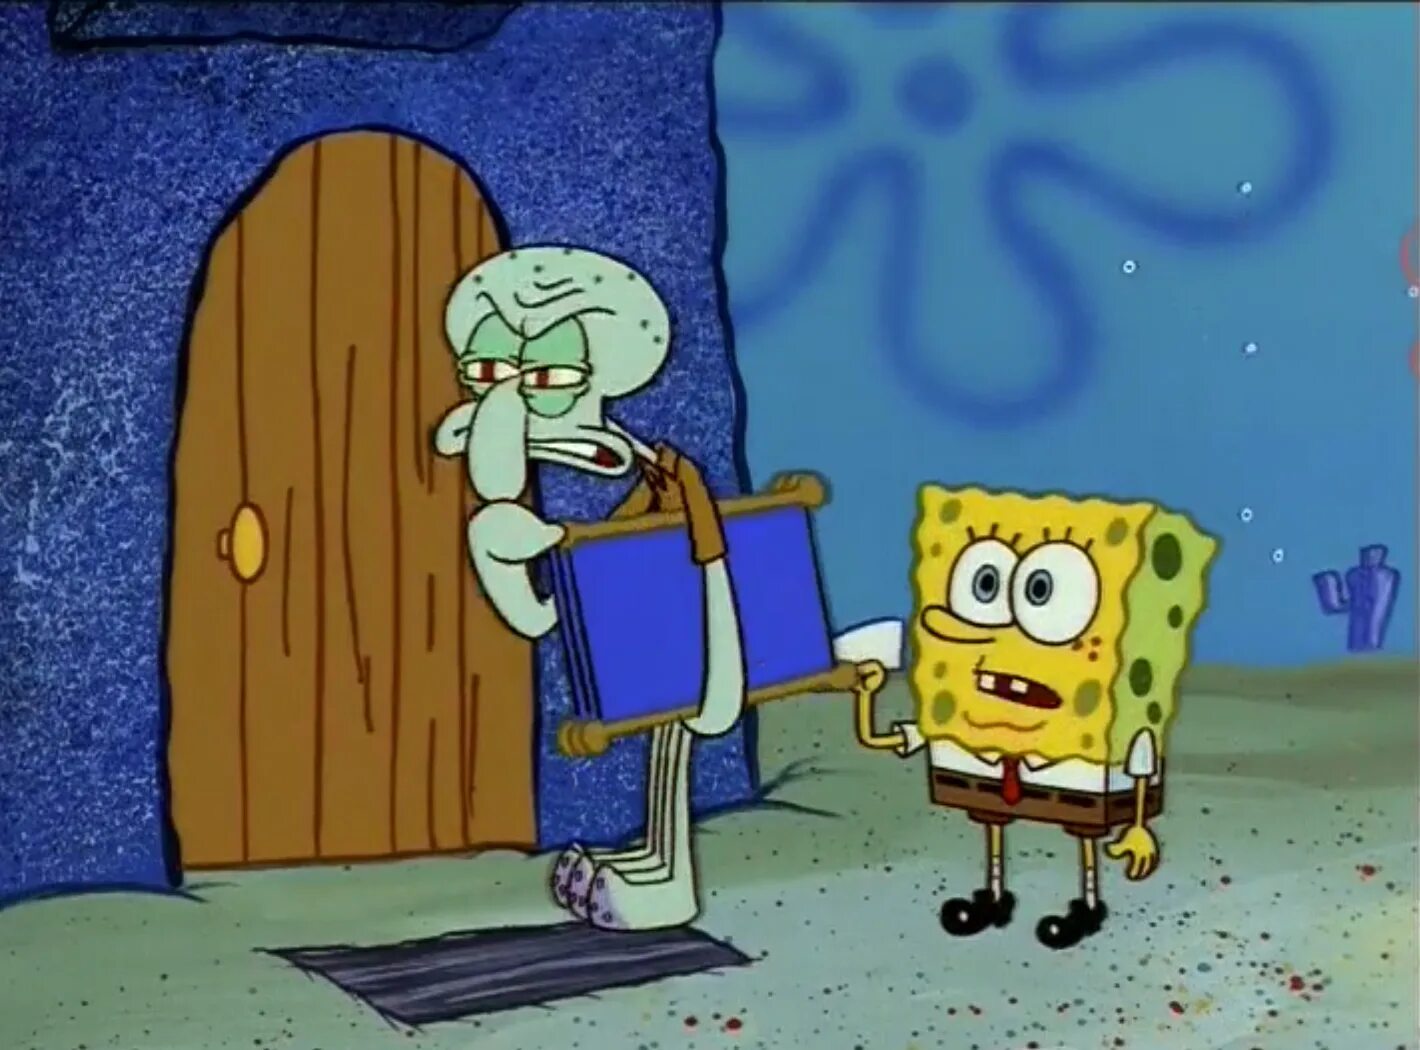 Spongebob squidward. Губка Боб и Сквидвард. Губка Боб квадратные штаны Squidward. Мем Сквидвард шезлонг. Губка Боб квадратные штаны Сквидвард.